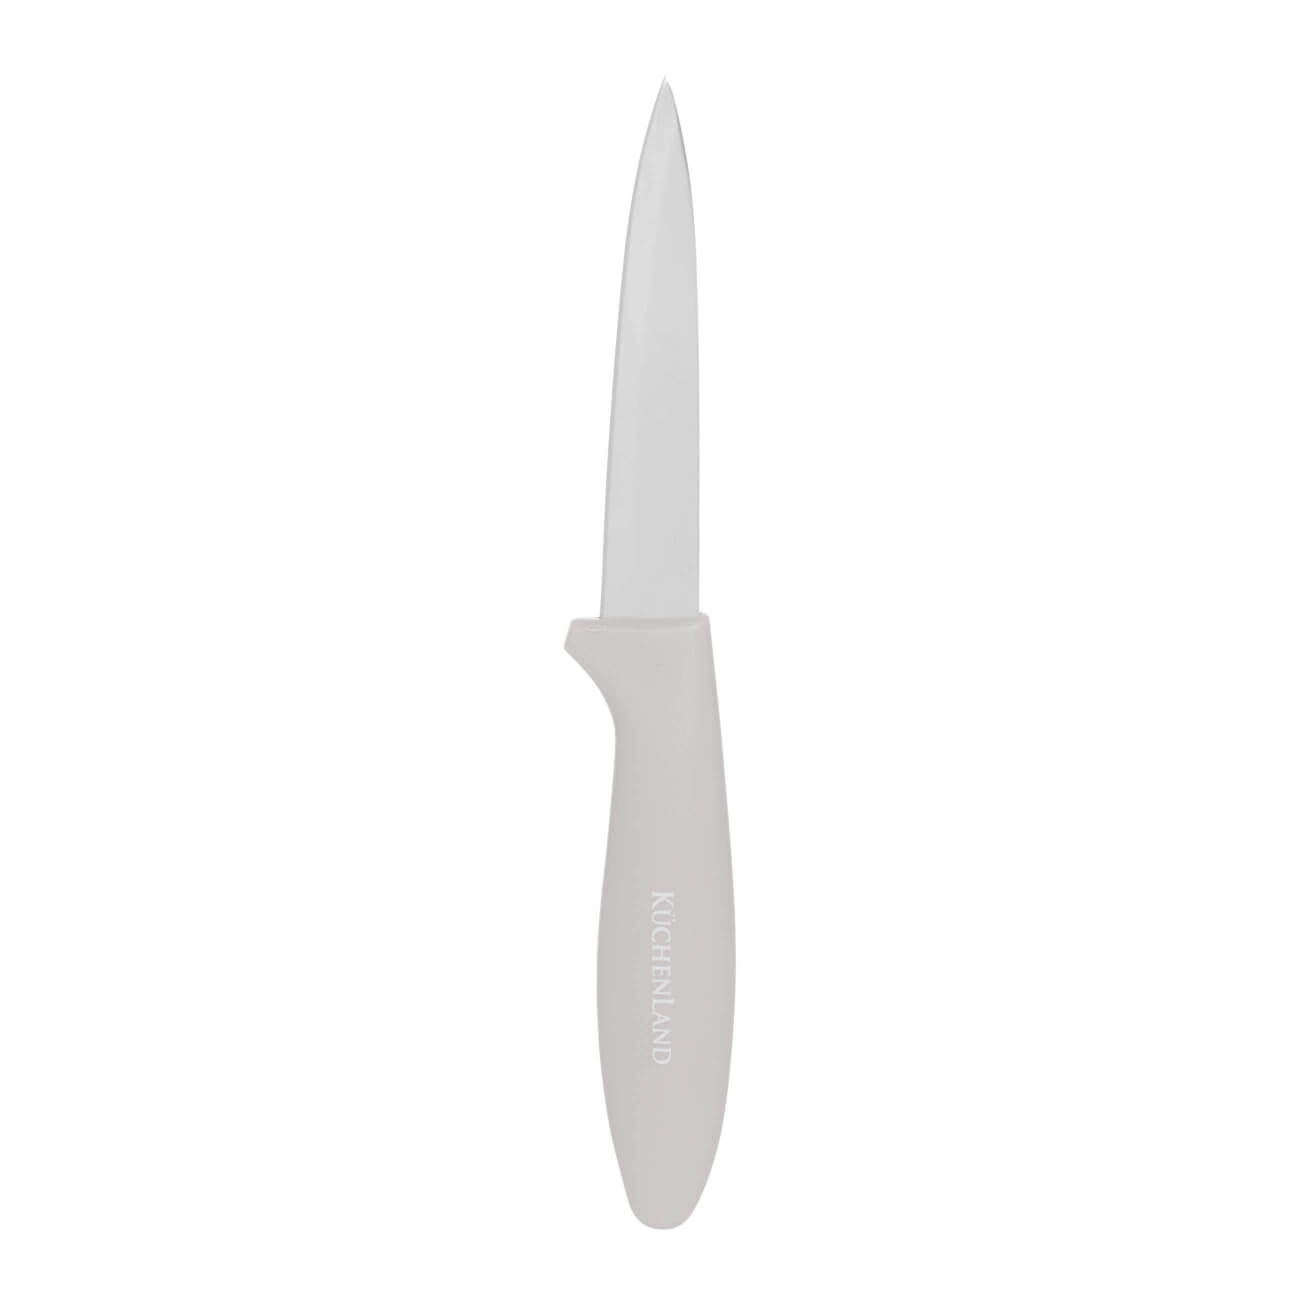 Нож для чистки овощей, 9 см, сталь/пластик, серо-коричневый, Regular нож для чистки овощей 6 см сталь пластик серо коричневый regular